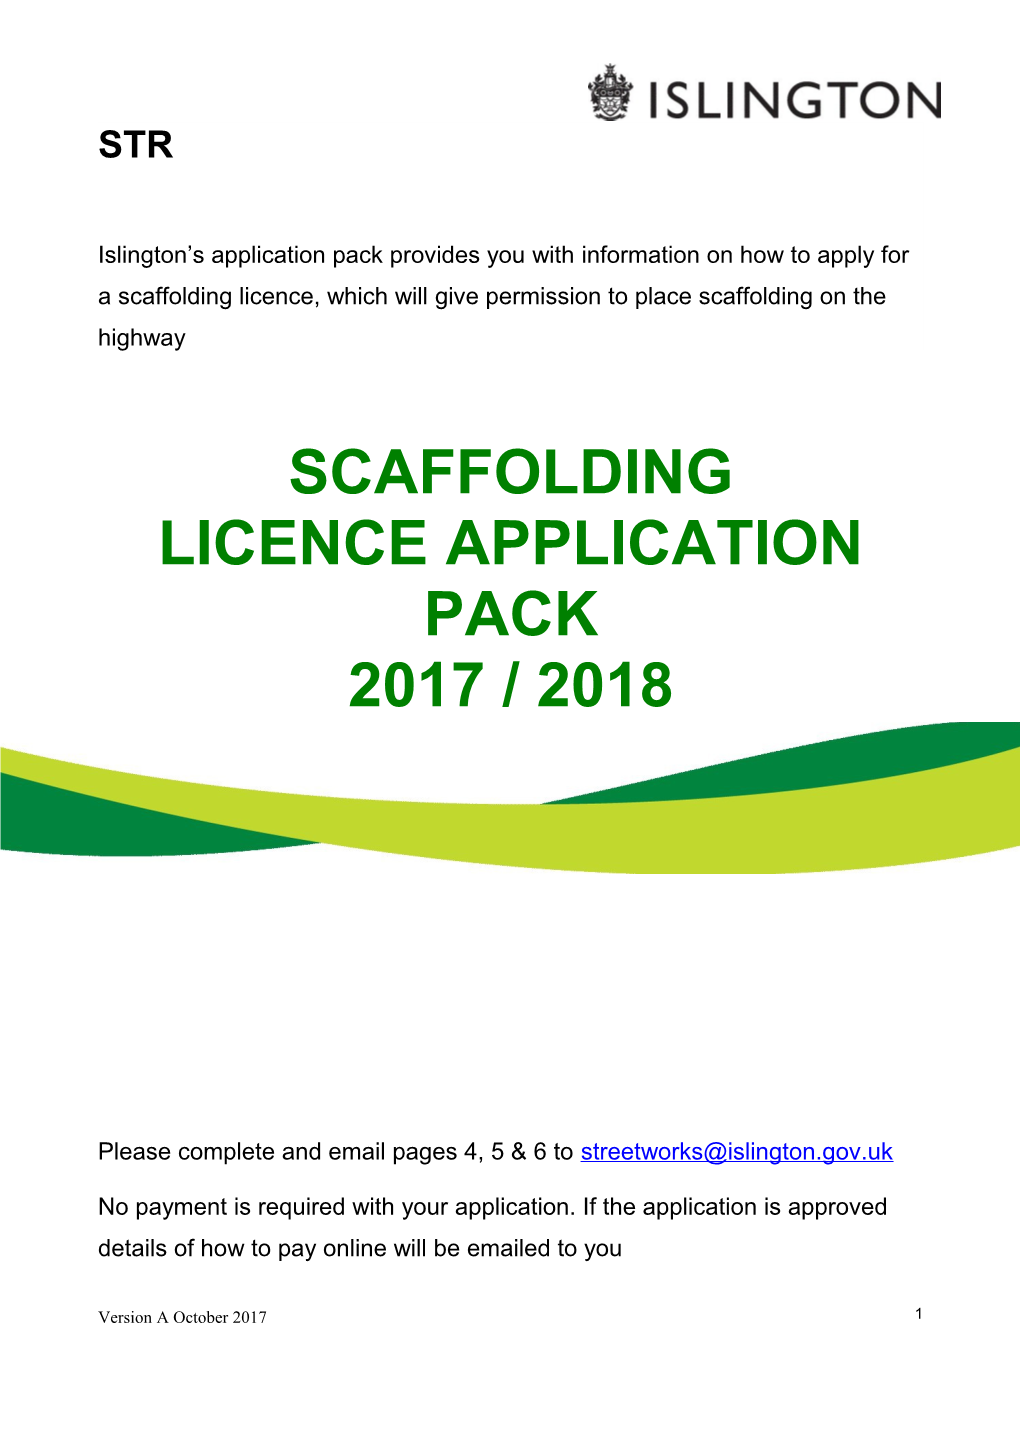 2017 Scaffolding Application Ver a Oct 17